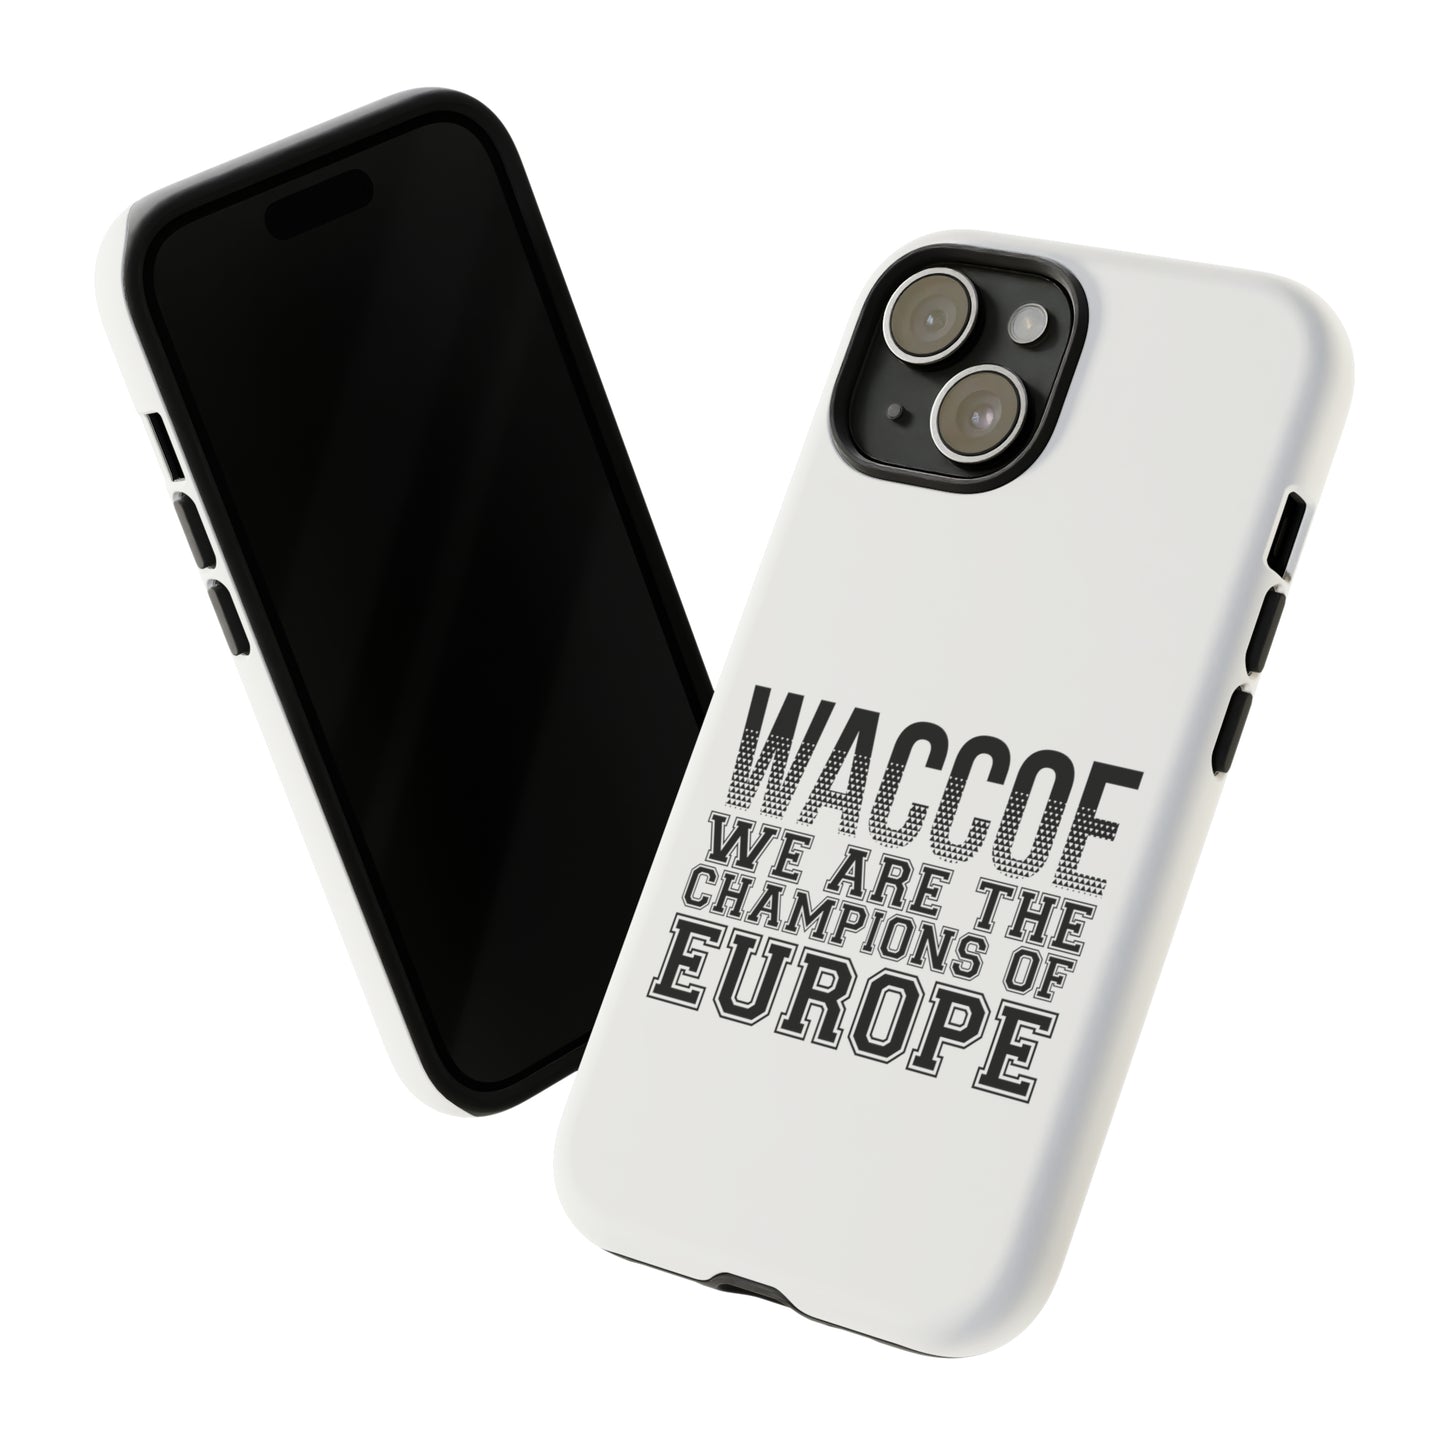 WACCOE Tough Phone Case